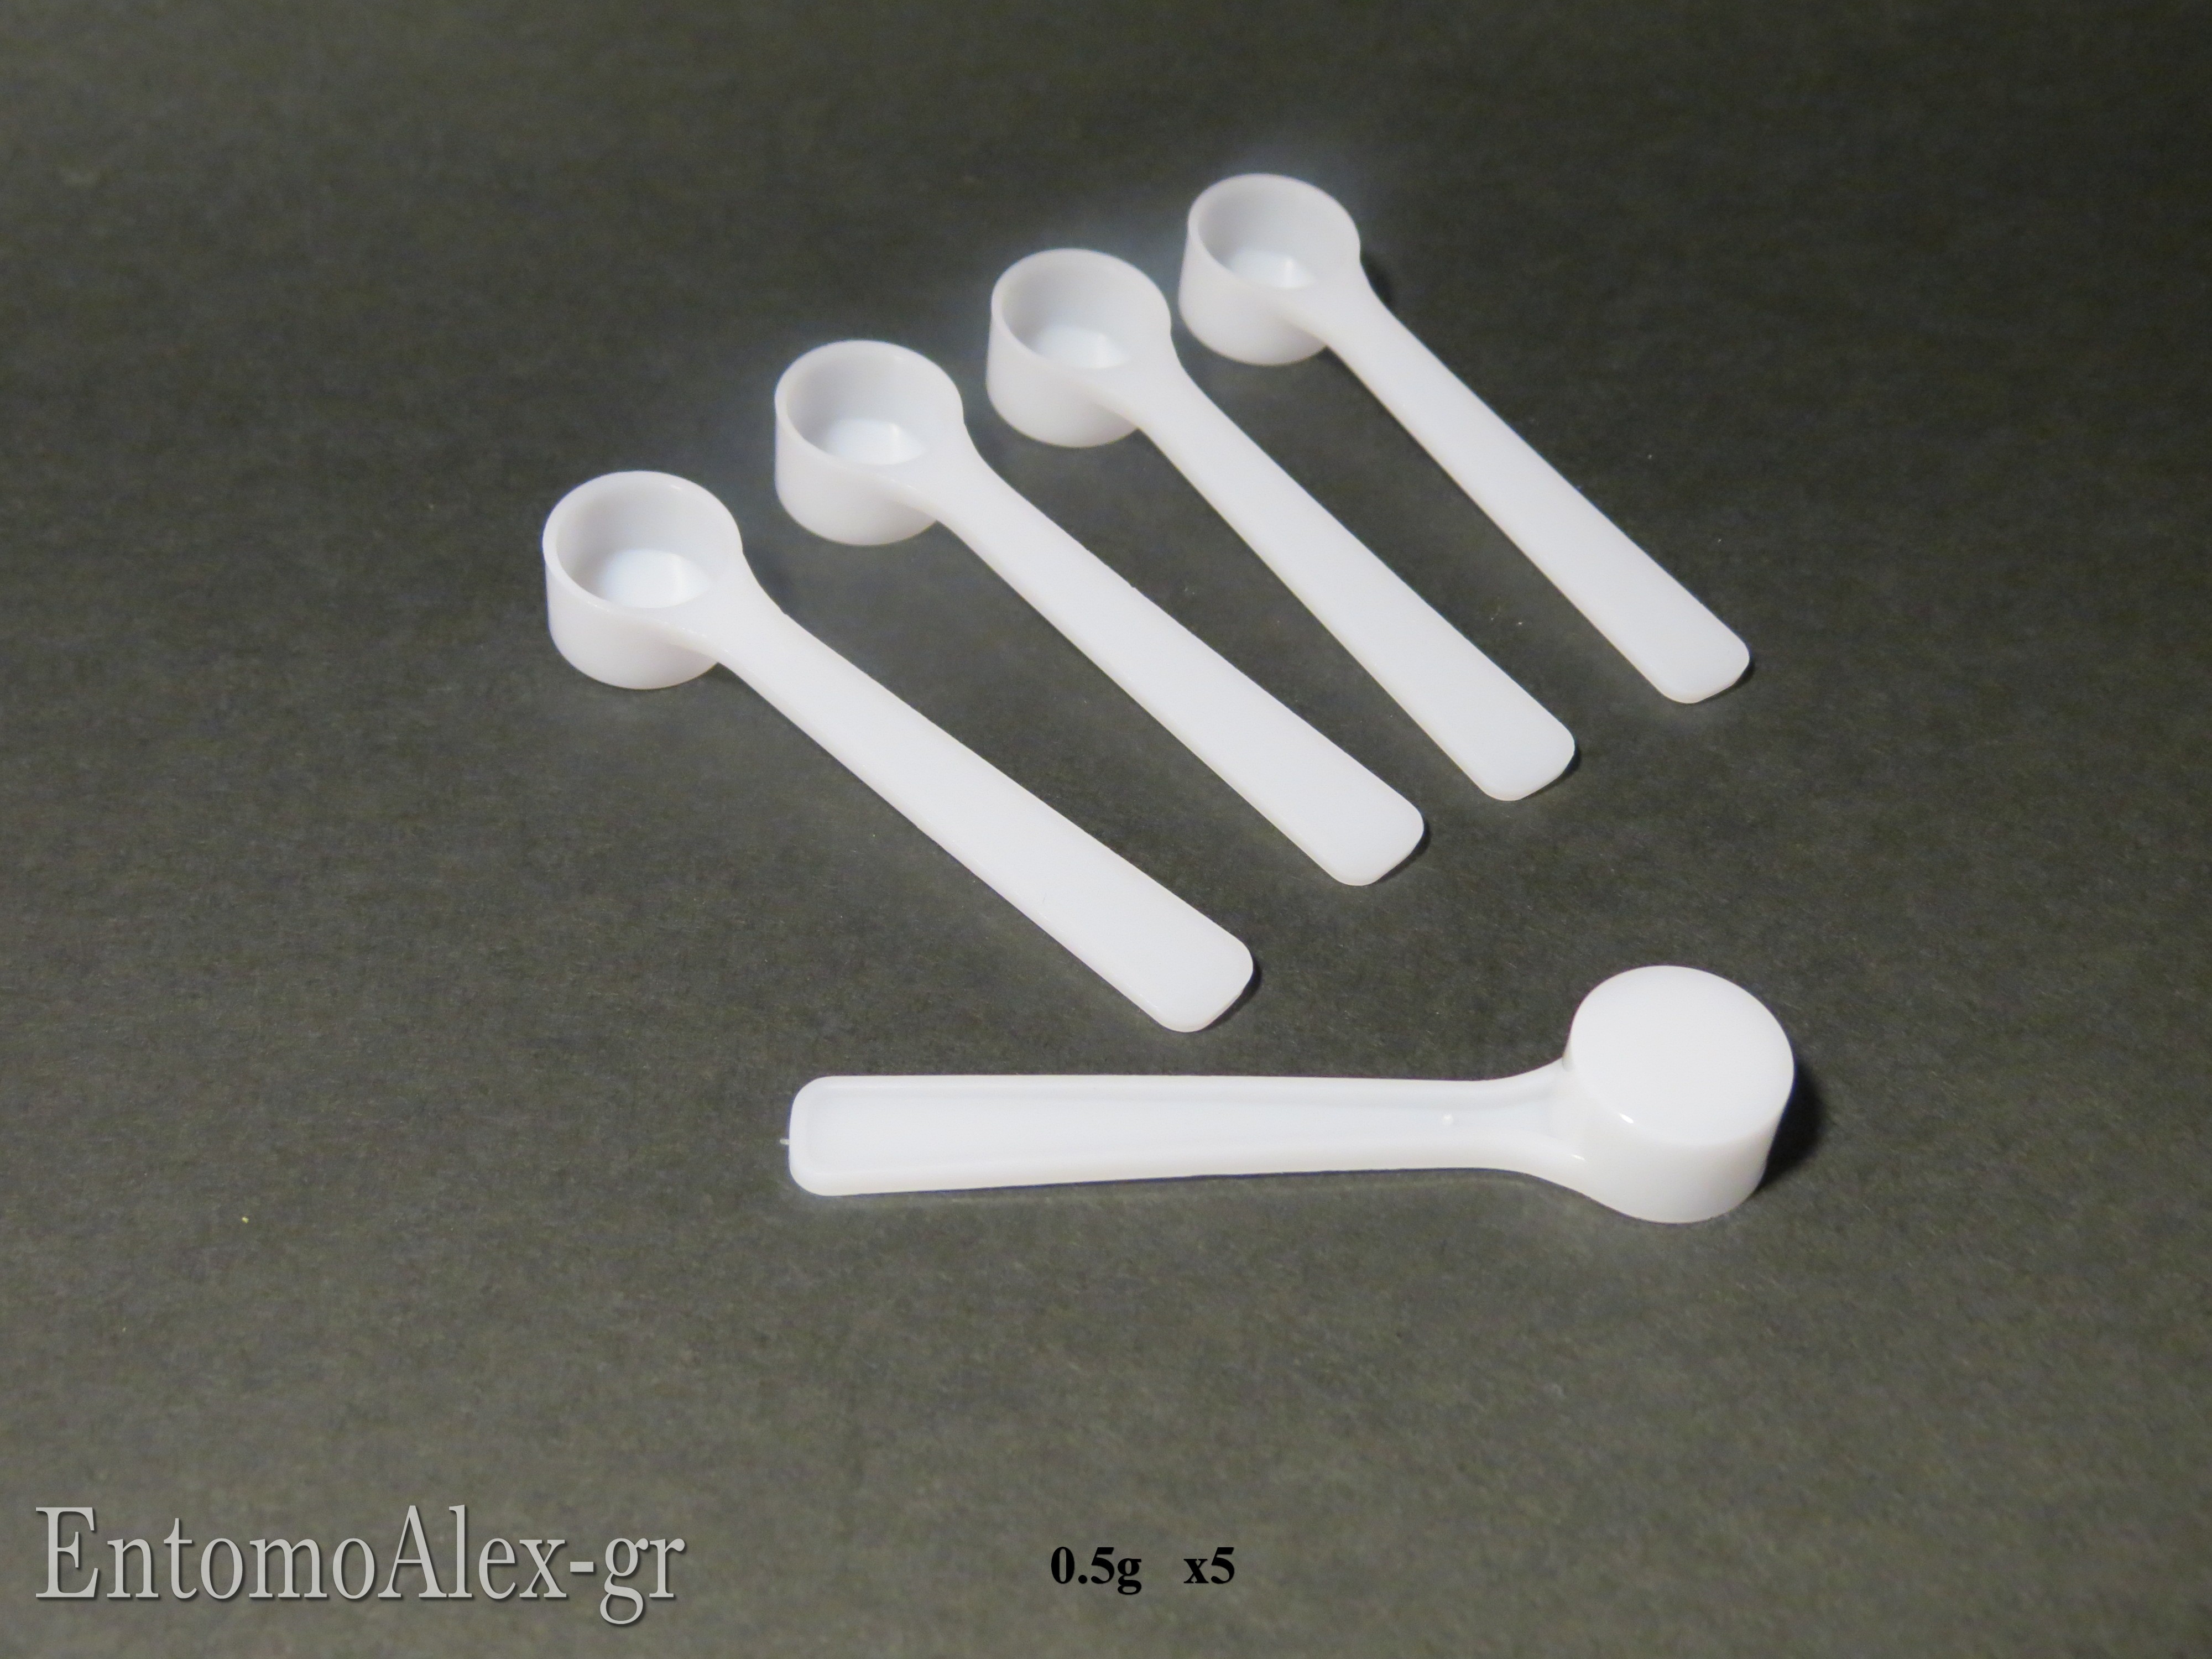 https://www.entomoalex-gr.com/469/5x-05g-micro-measuring-spoons.jpg